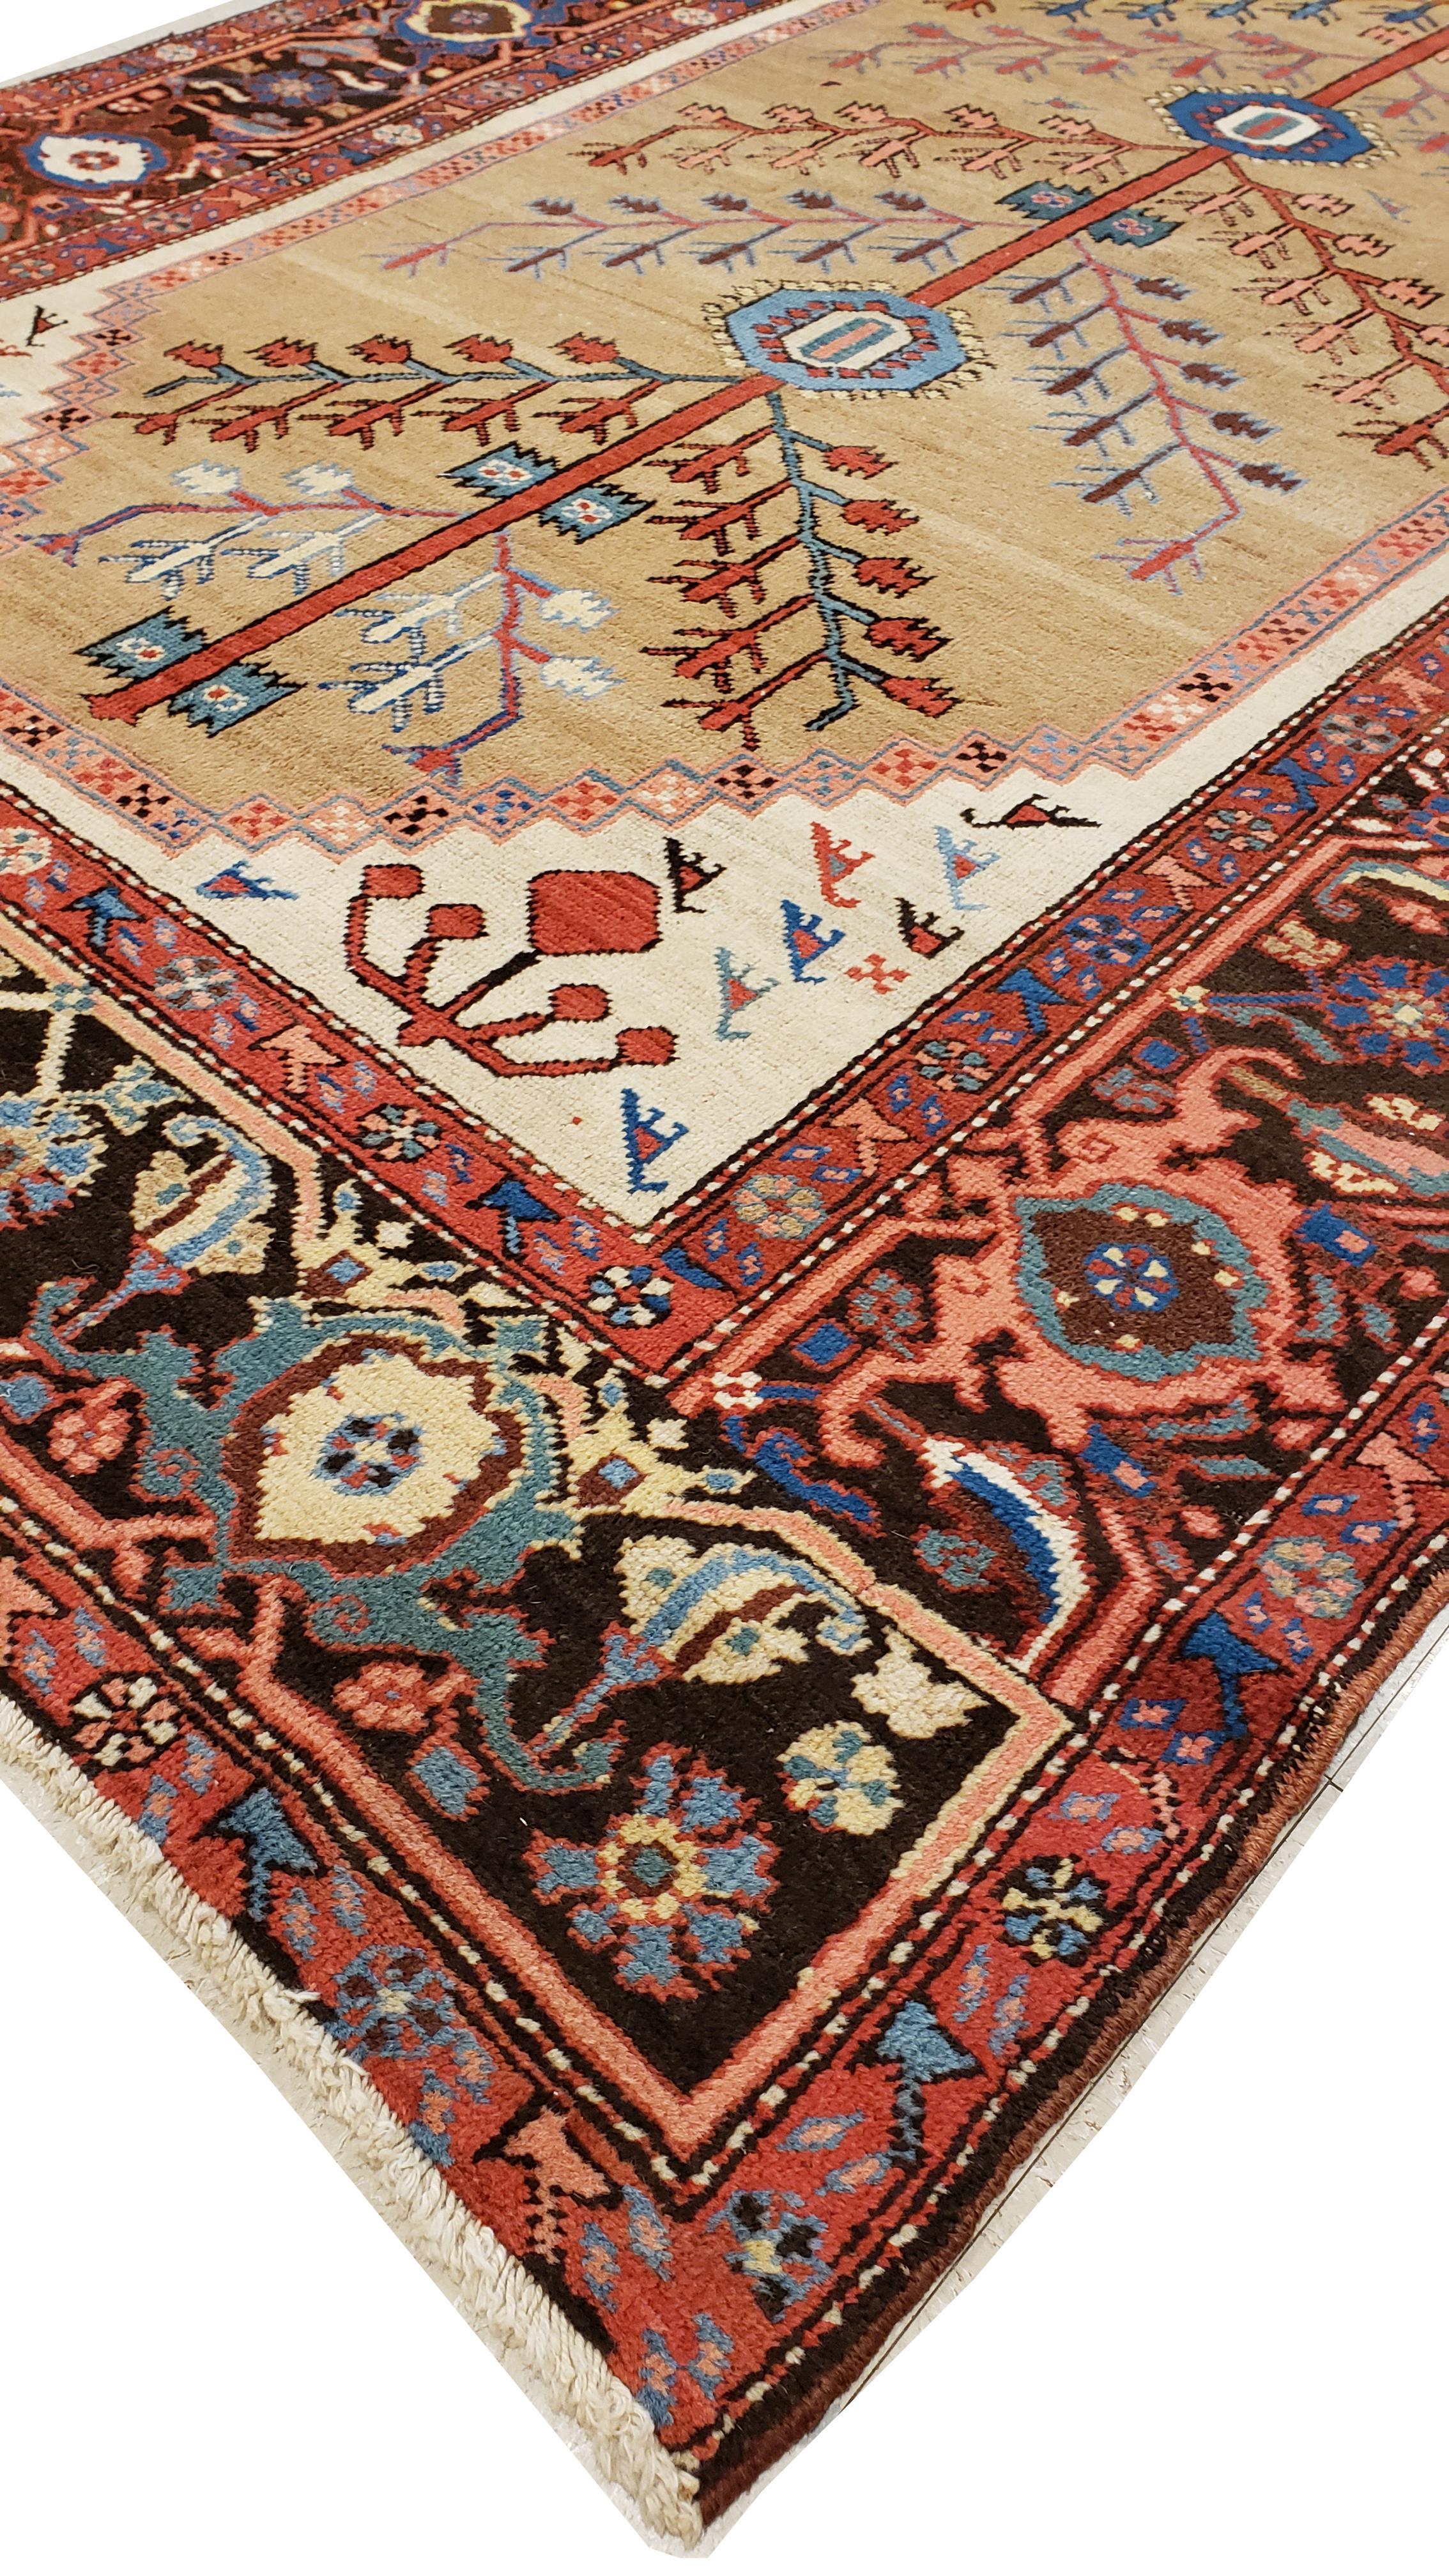 19th Century Antique Persian Bakhshaish Carpet, Handmade Wool Oriental Rug, Ivory Light Blue For Sale